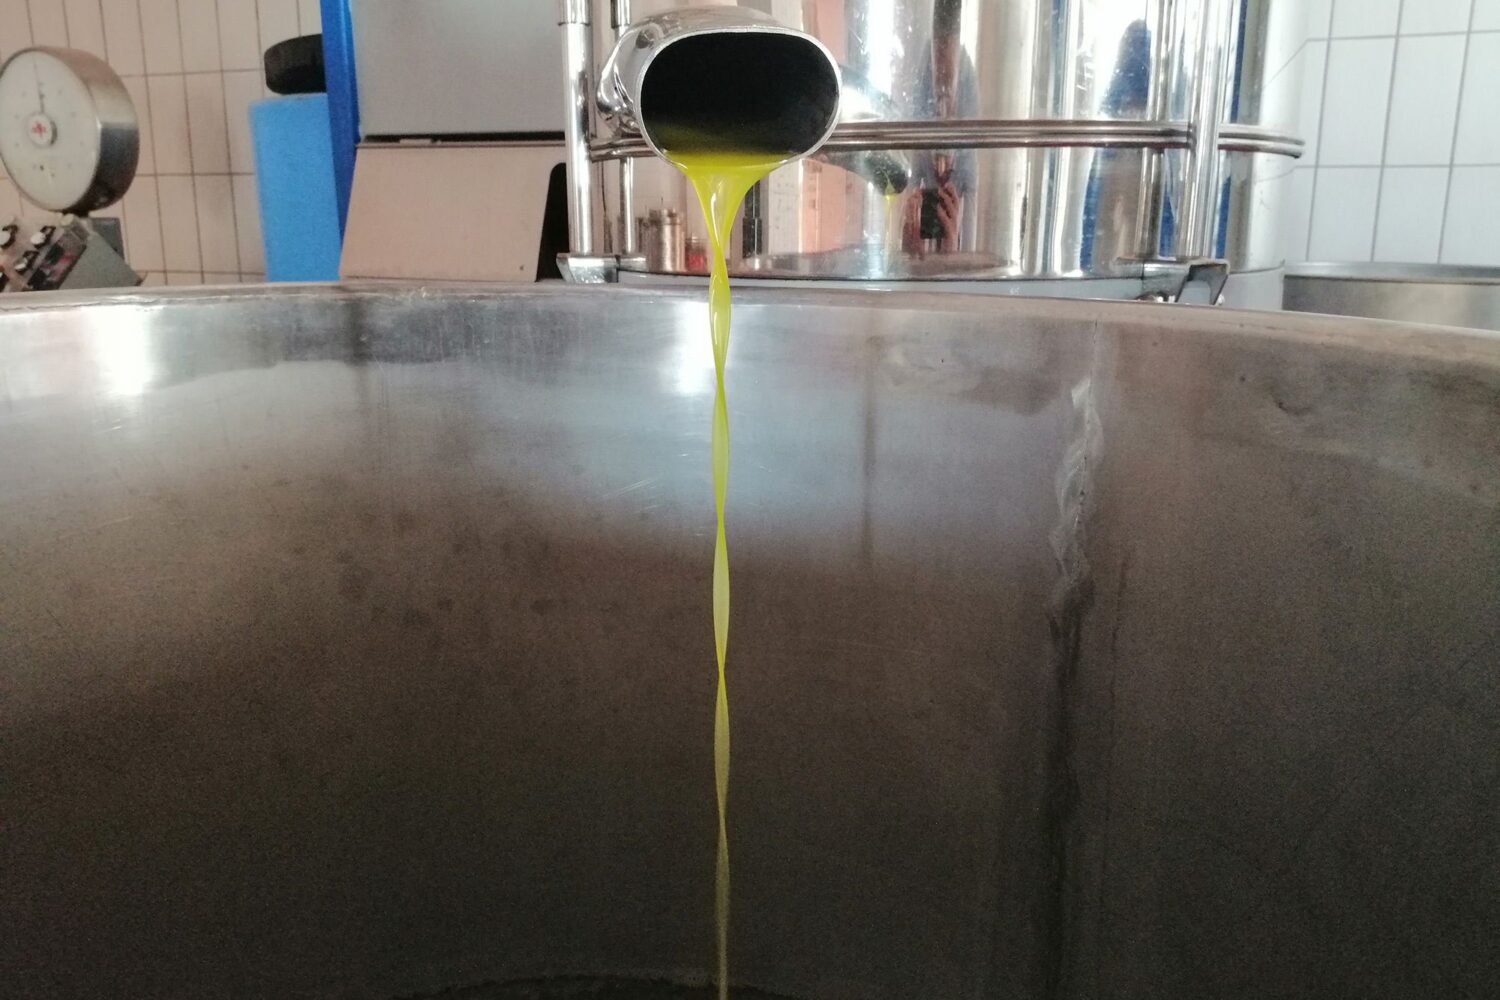 Exra virgin olive oil Puglia